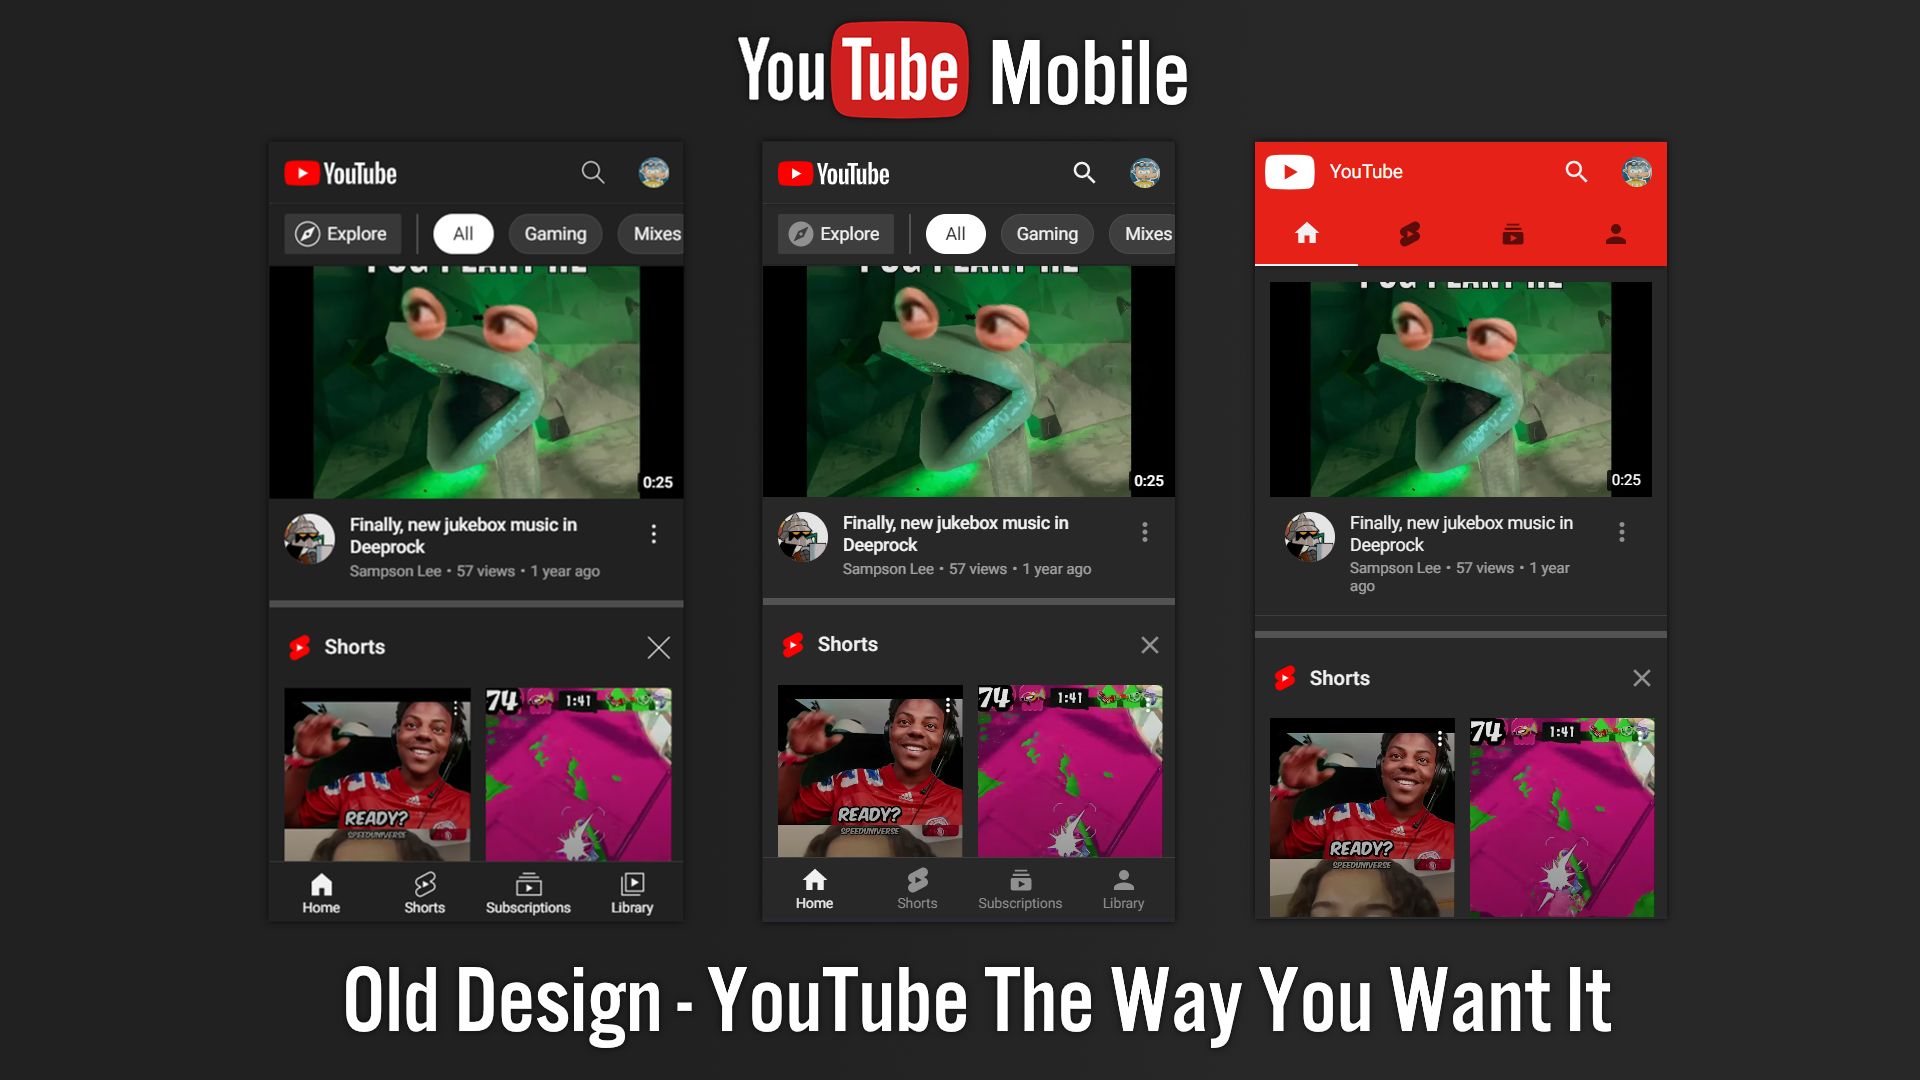 Screenshot of YouTube Mobile - Old Design